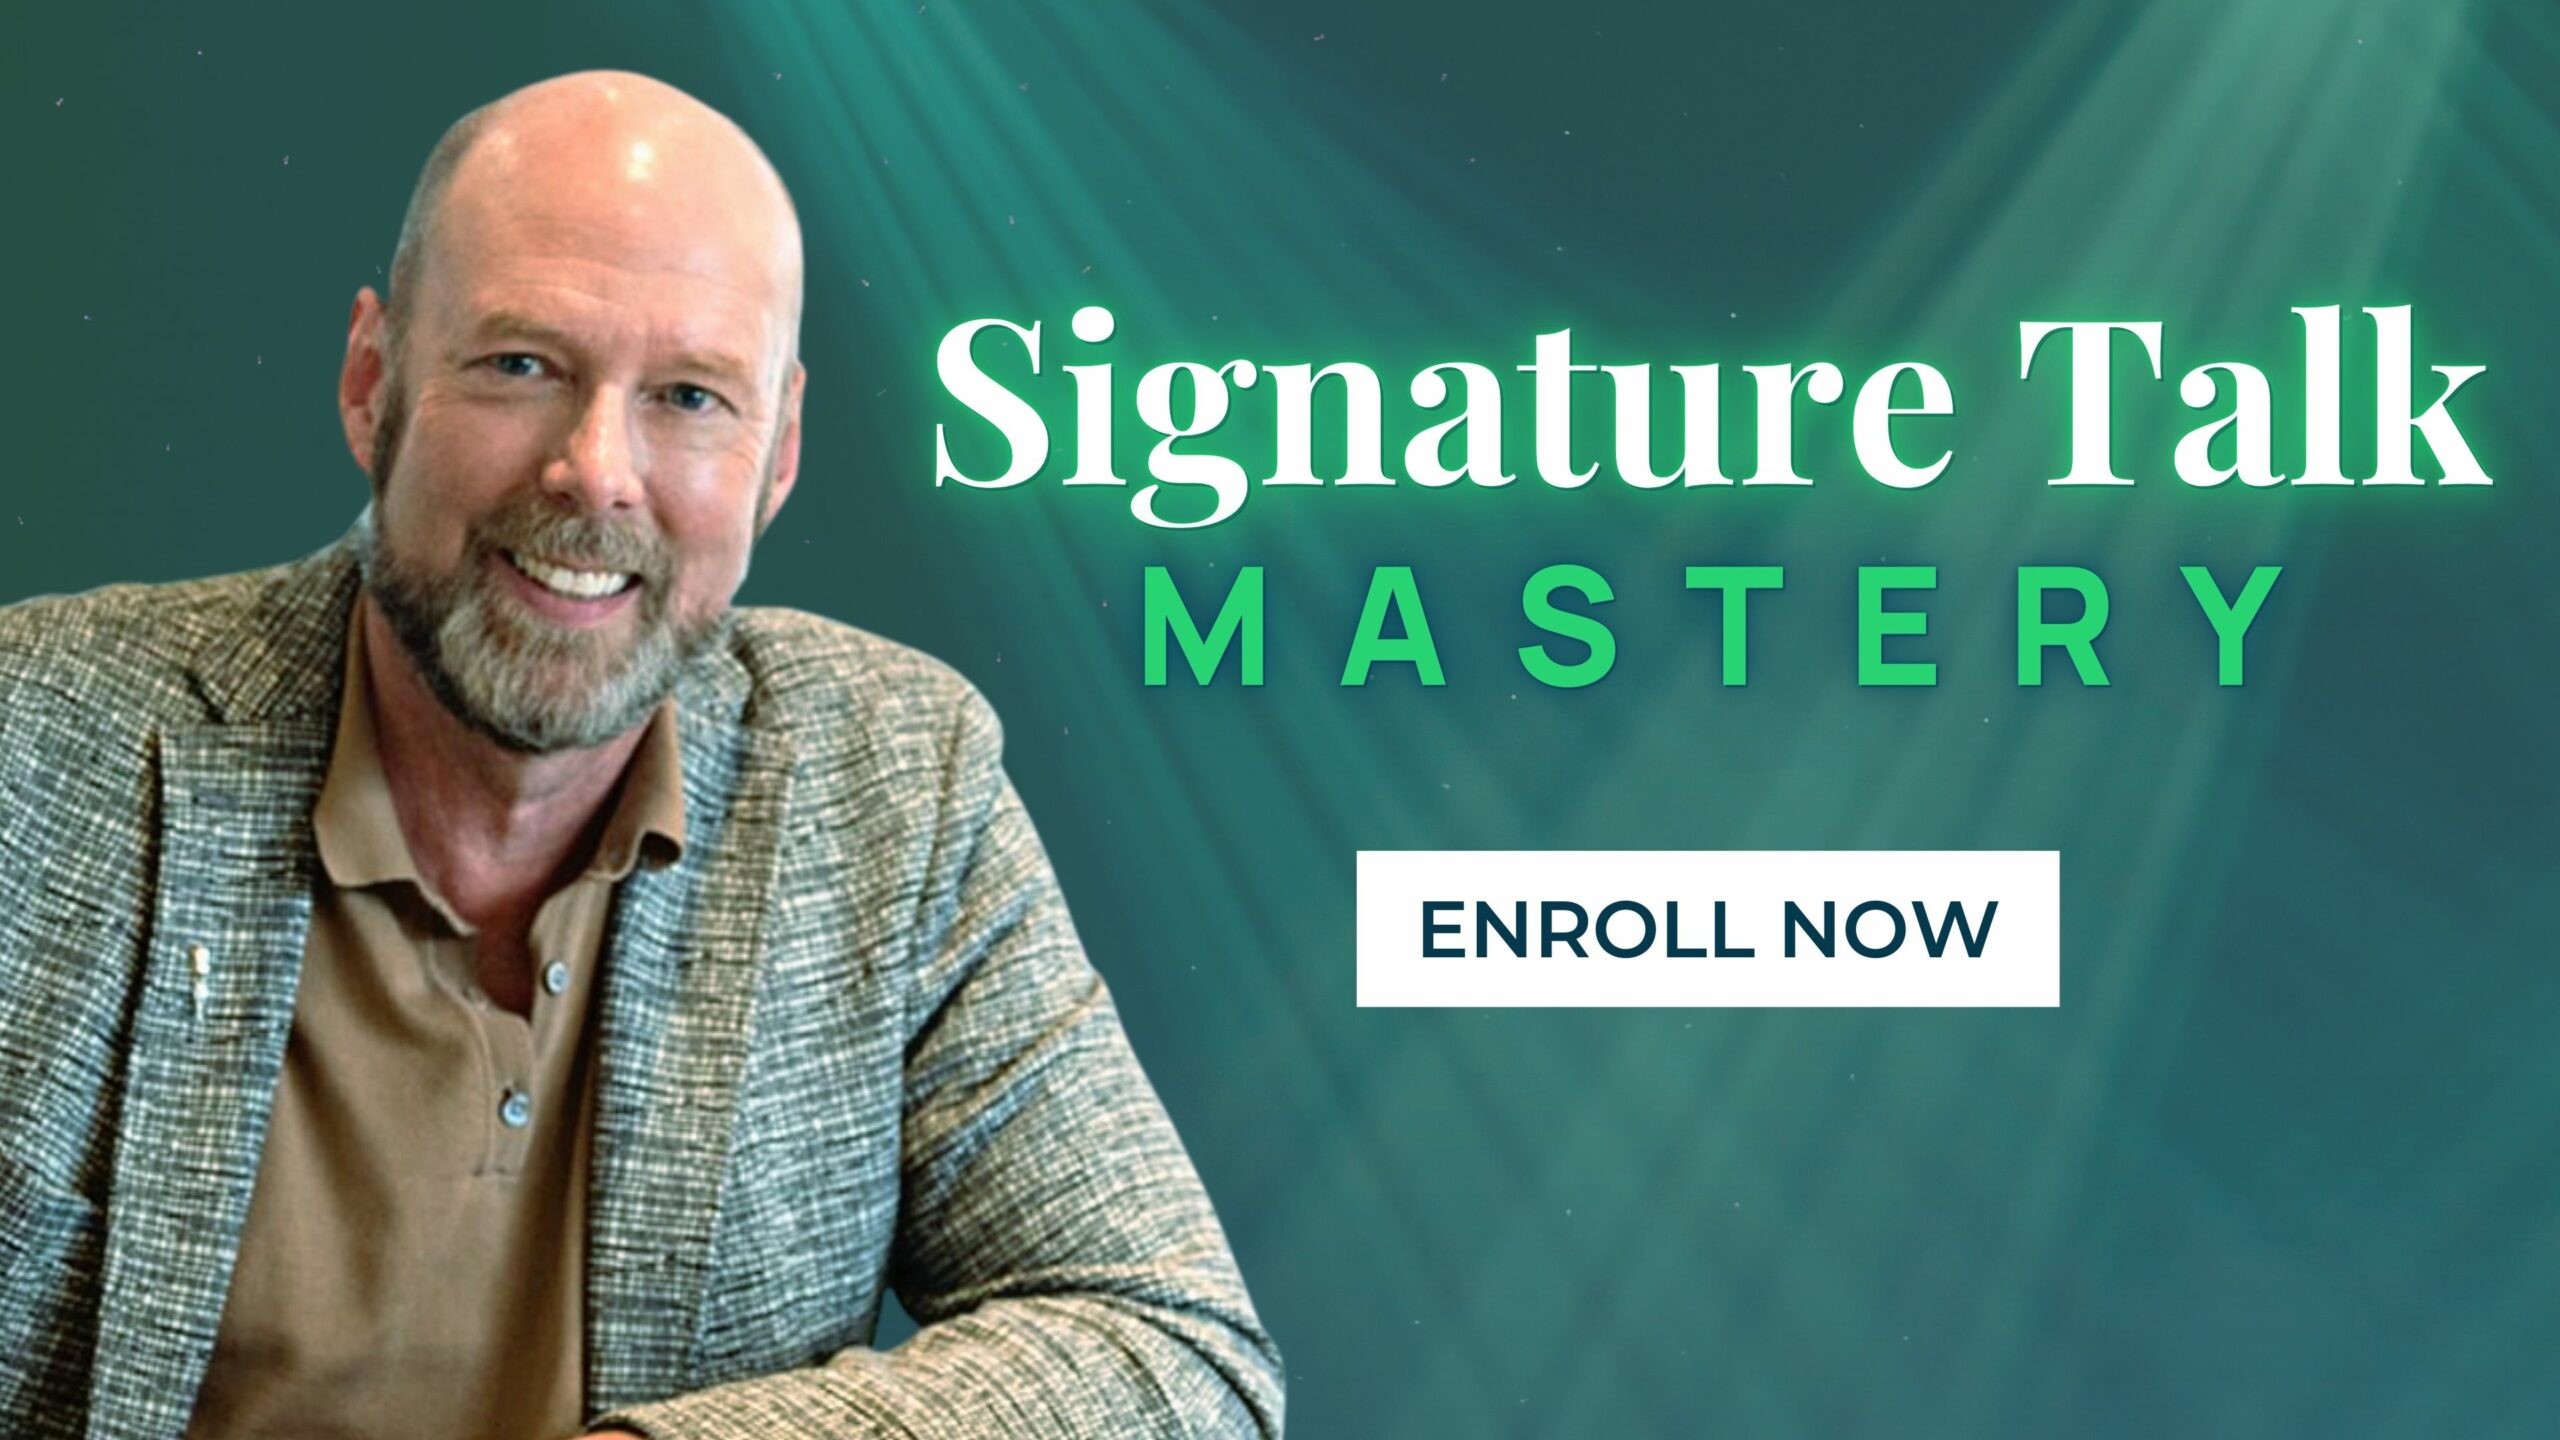 Signature Talk Mastery Course